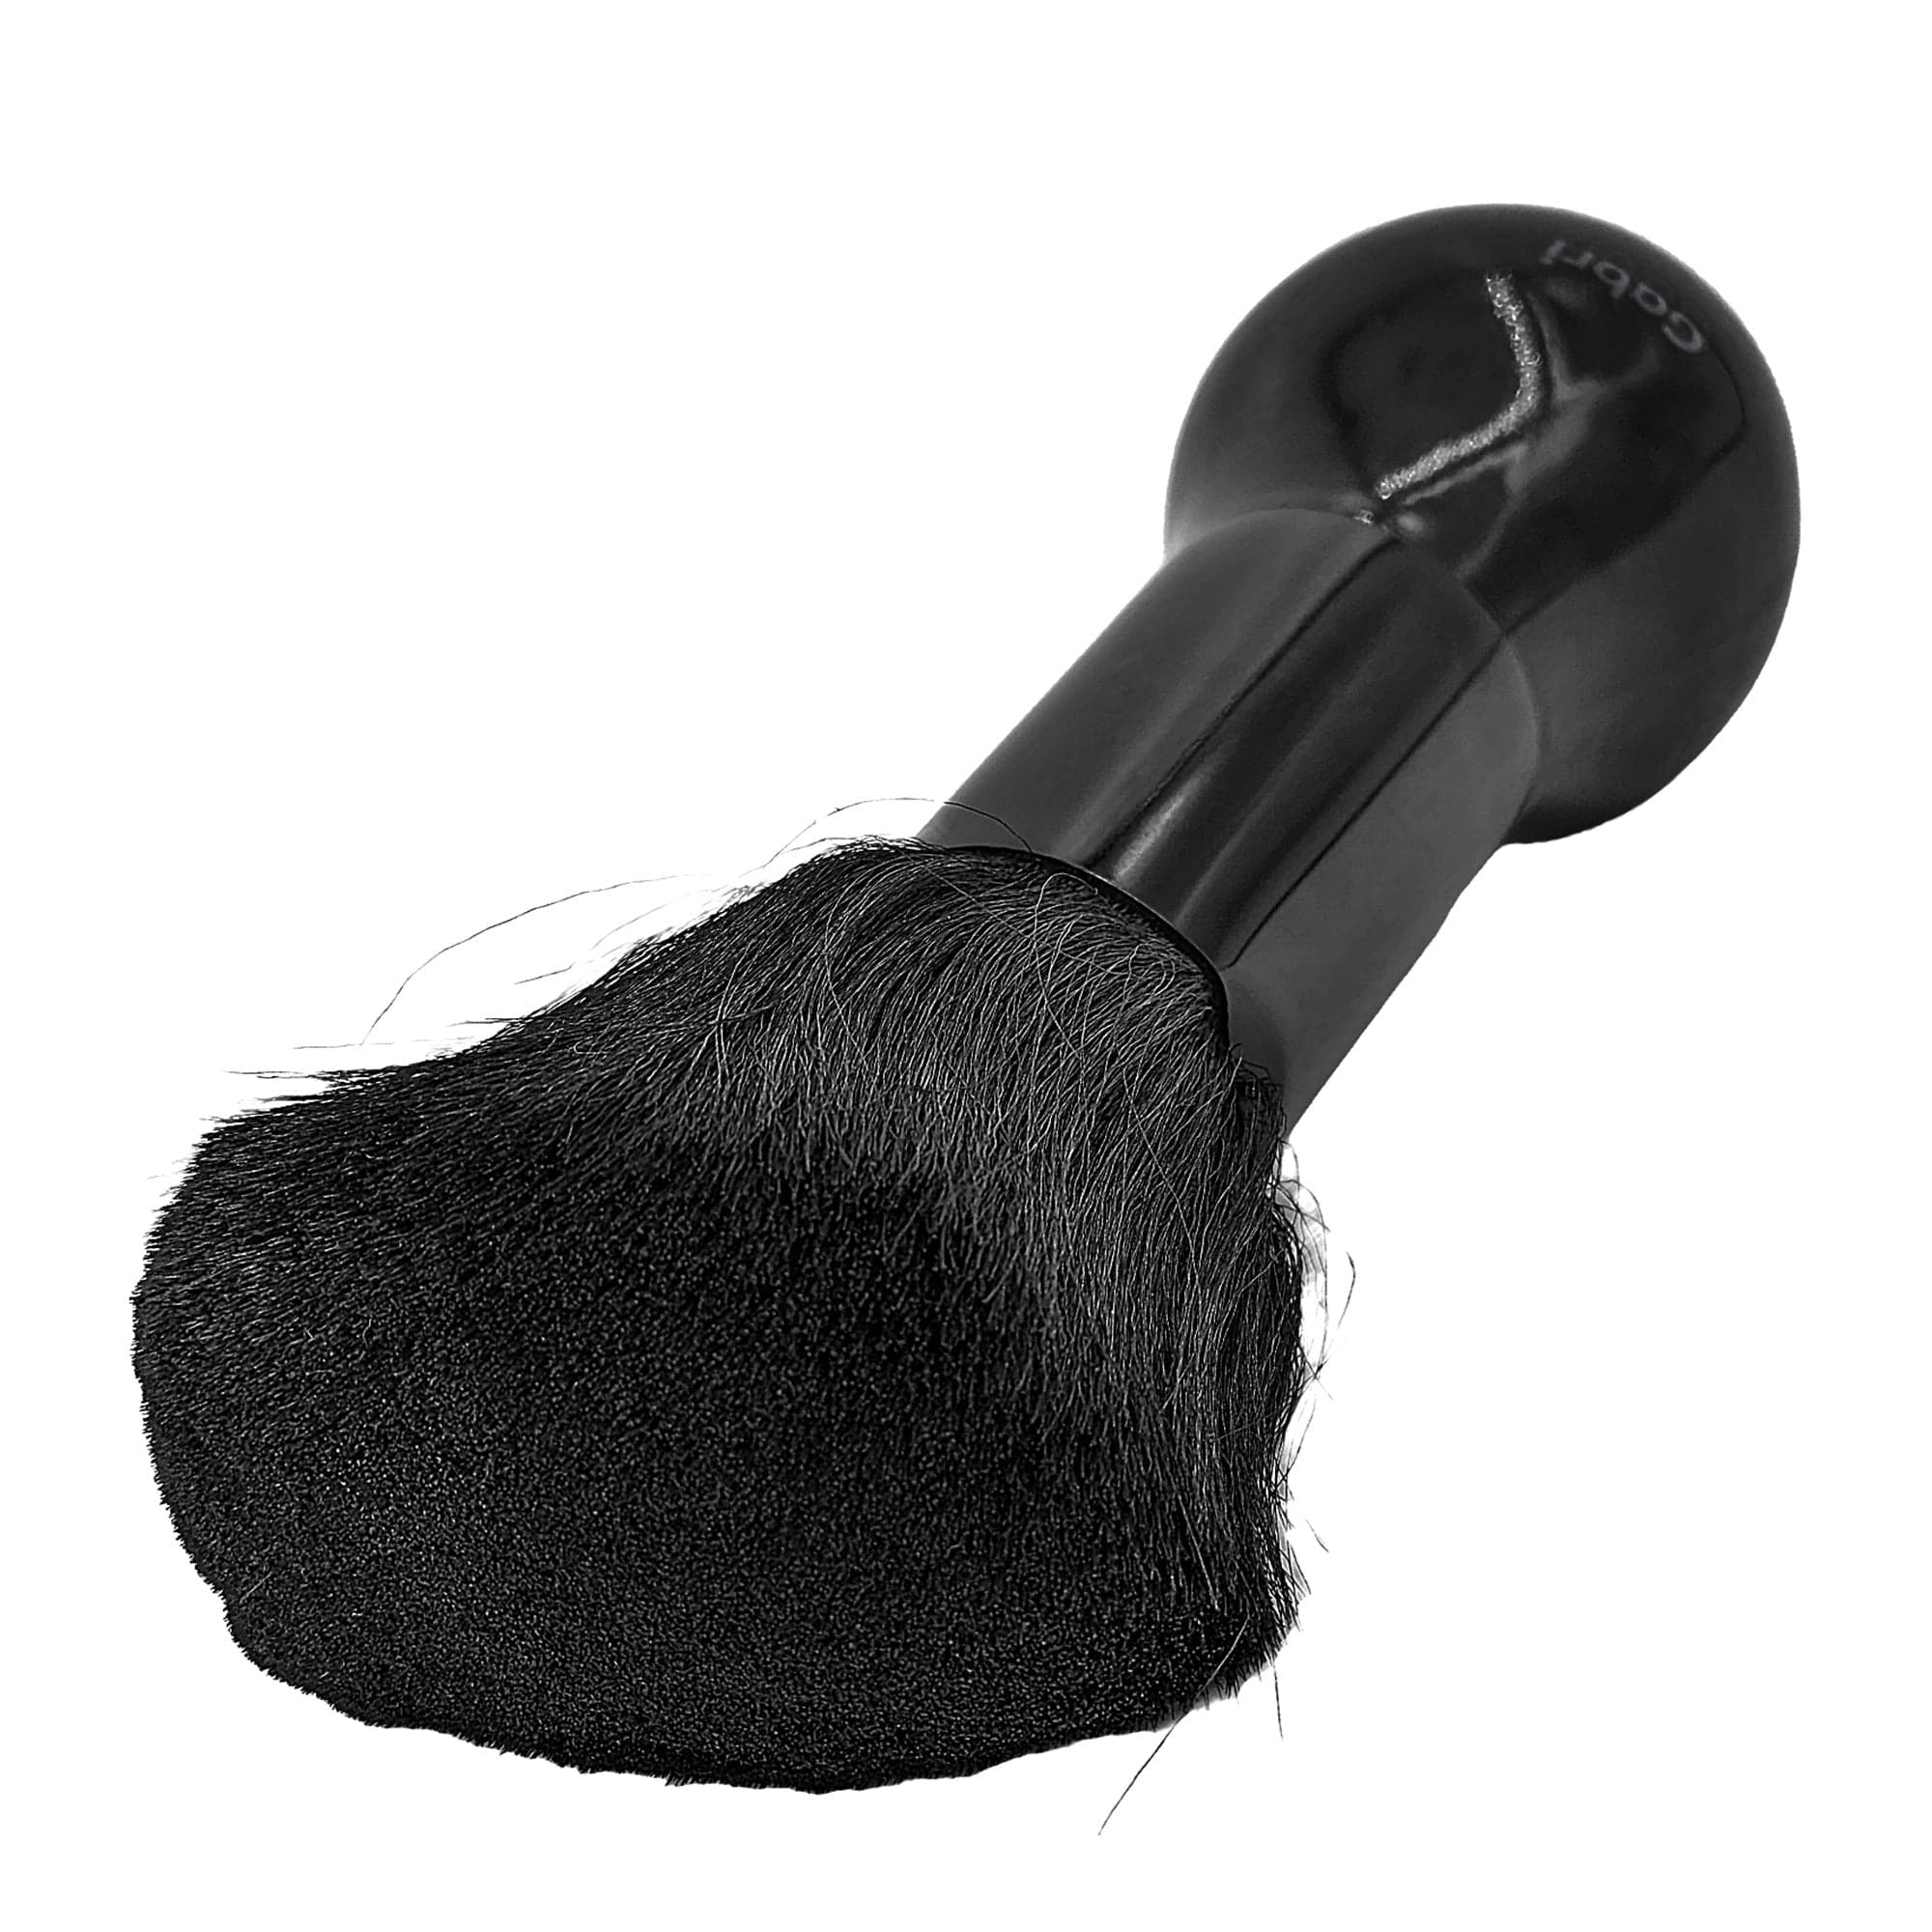 Gabri - Neck Duster Brush Metal Round Black Bristles 19cm